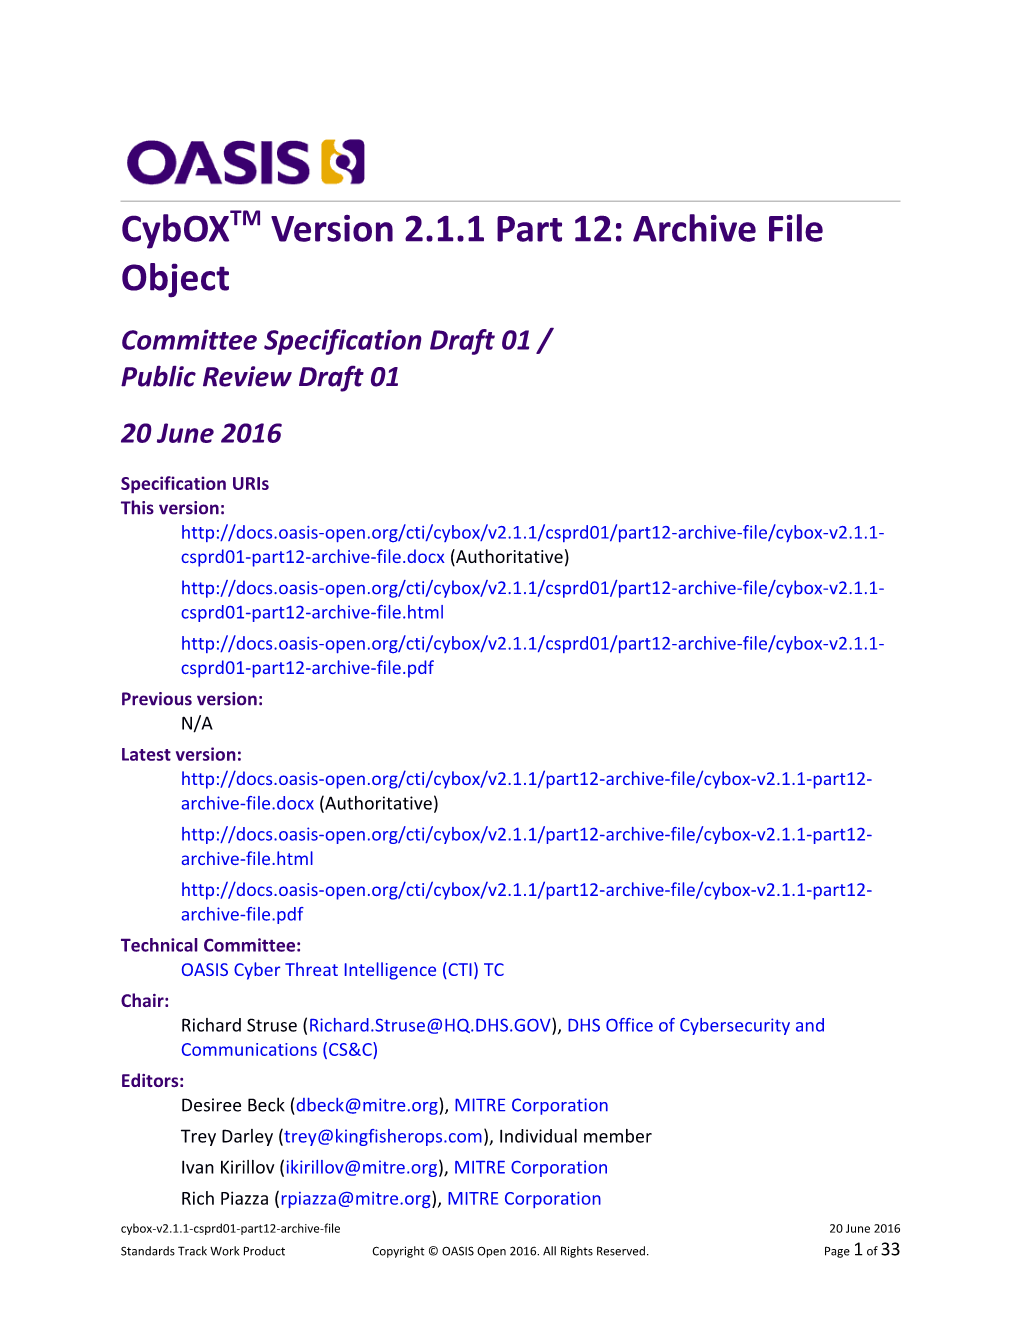 Cybox Version 2.1.1 Part 12: Archive File Object